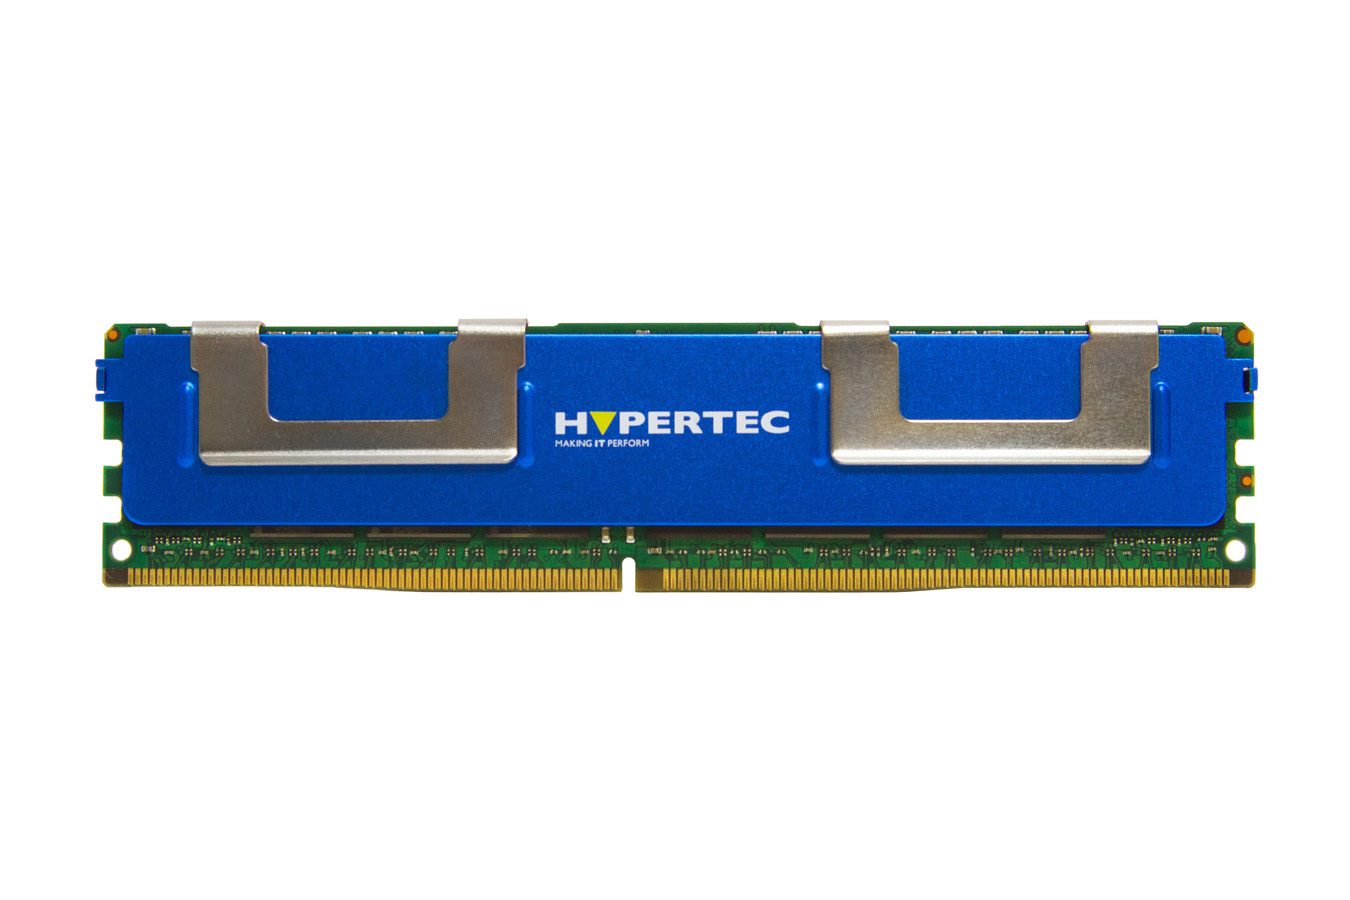 44T1599-HY HYPERTEC A Hypertec Legacy Lenovo equivalent 4 GB Dual rank - registered ECC DDR3 SDRAM - DIMM 240-pin 1333 MHz ( PC3-10600 ) from Hypertec